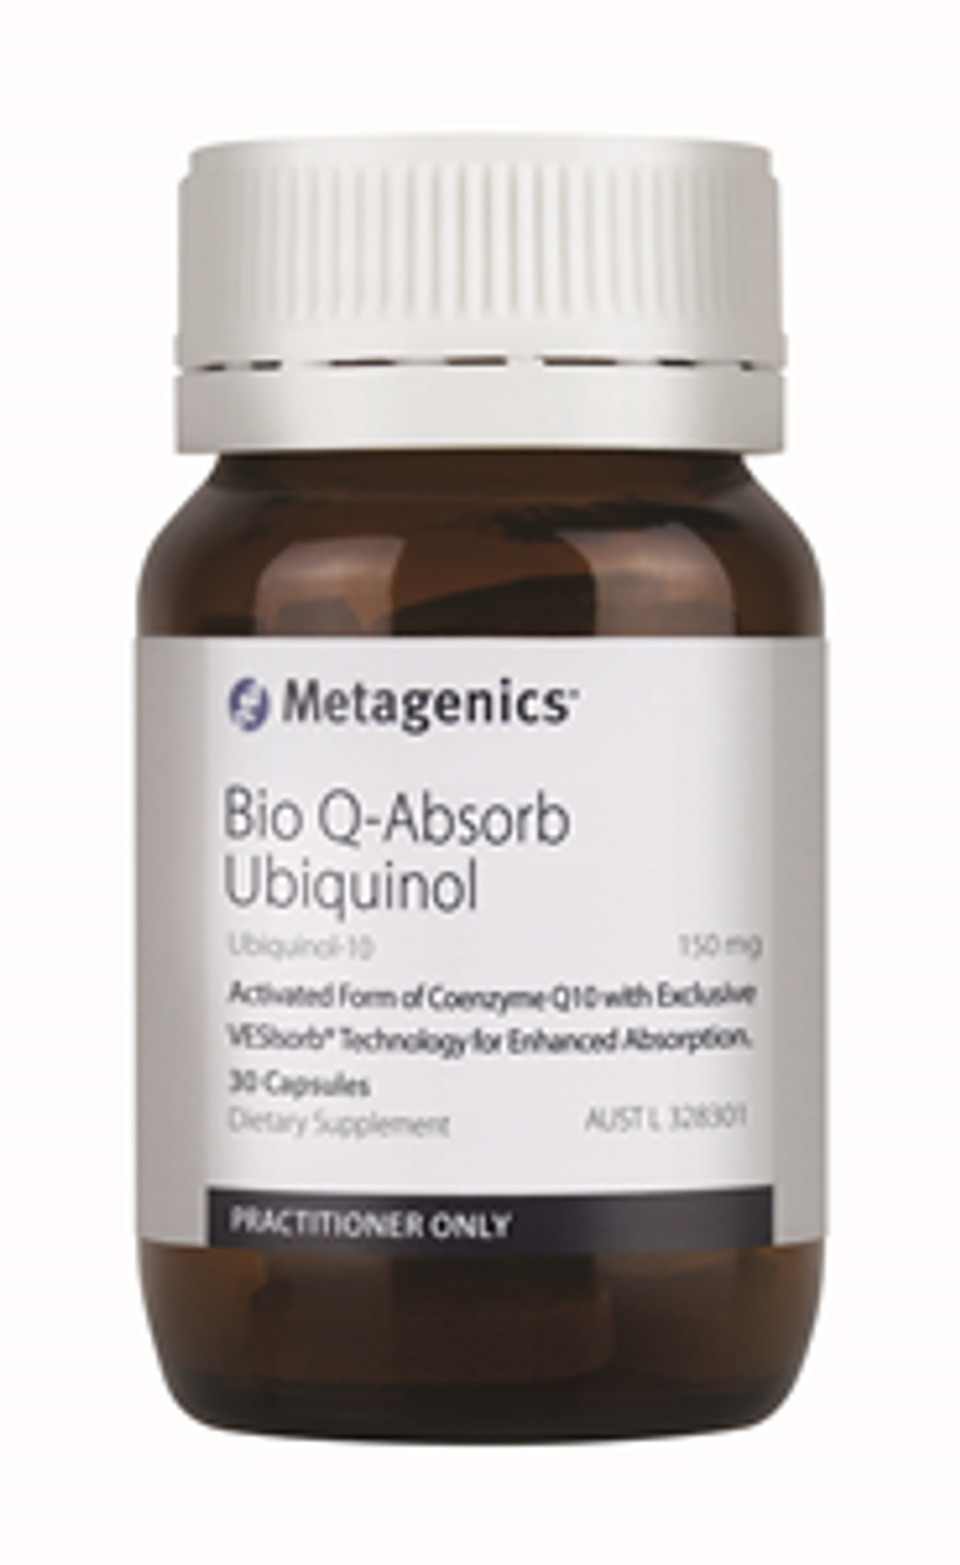 Bio Q-Absorb Ubiquinol Active form of Coenzyme Q10